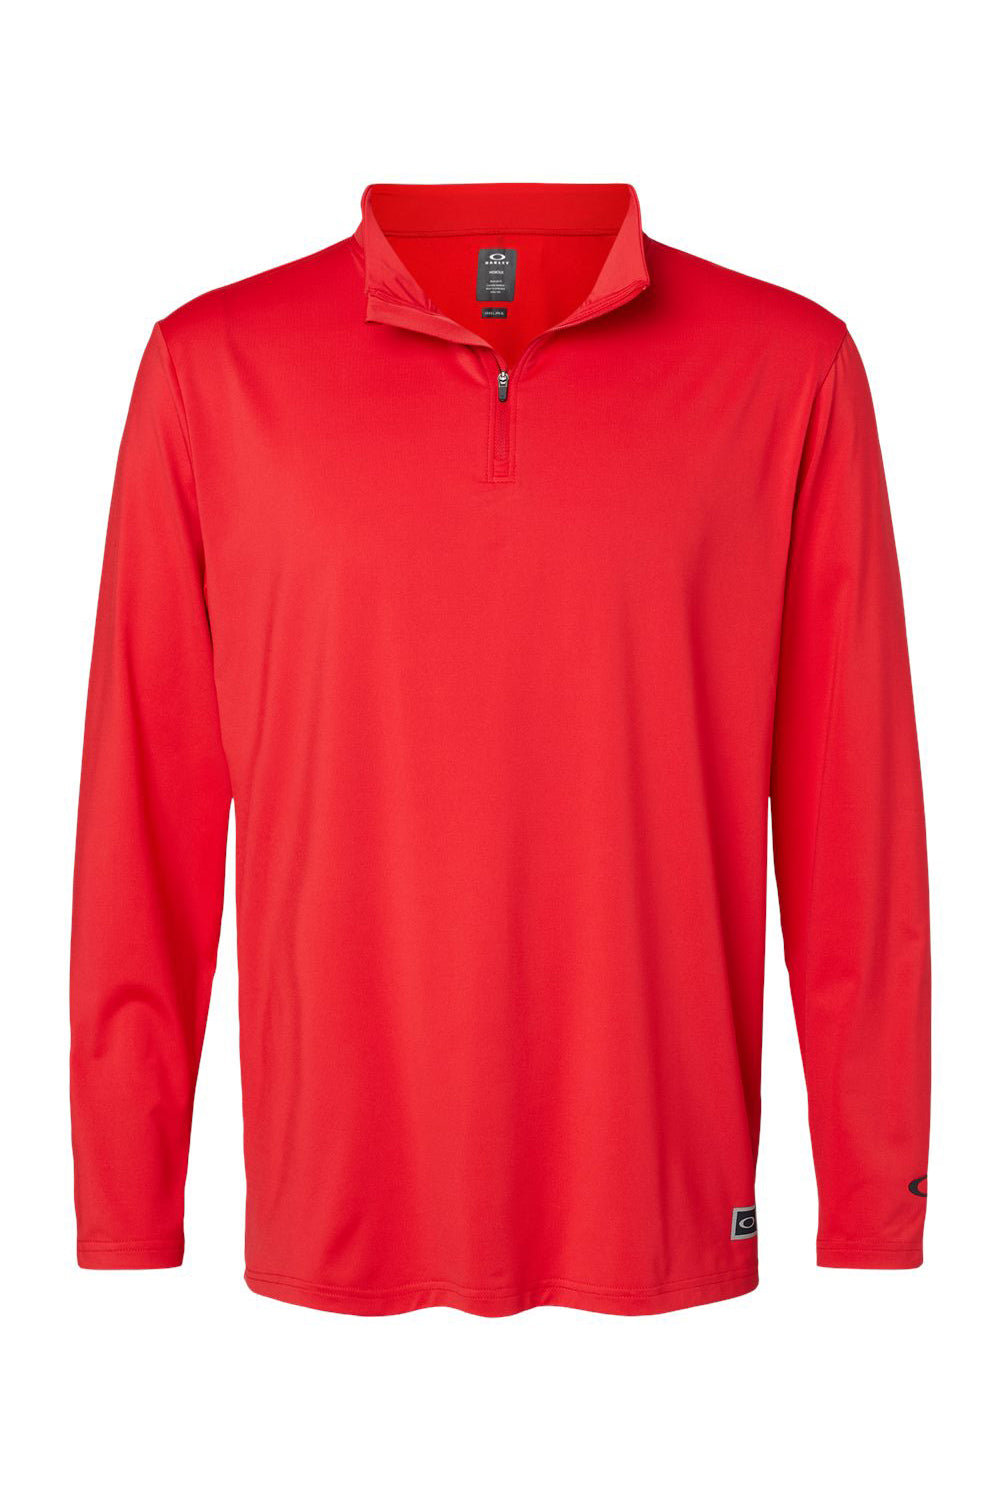 Oakley FOA402997 Mens Team Issue Podium 1/4 Zip Sweatshirt Team Red Flat Front